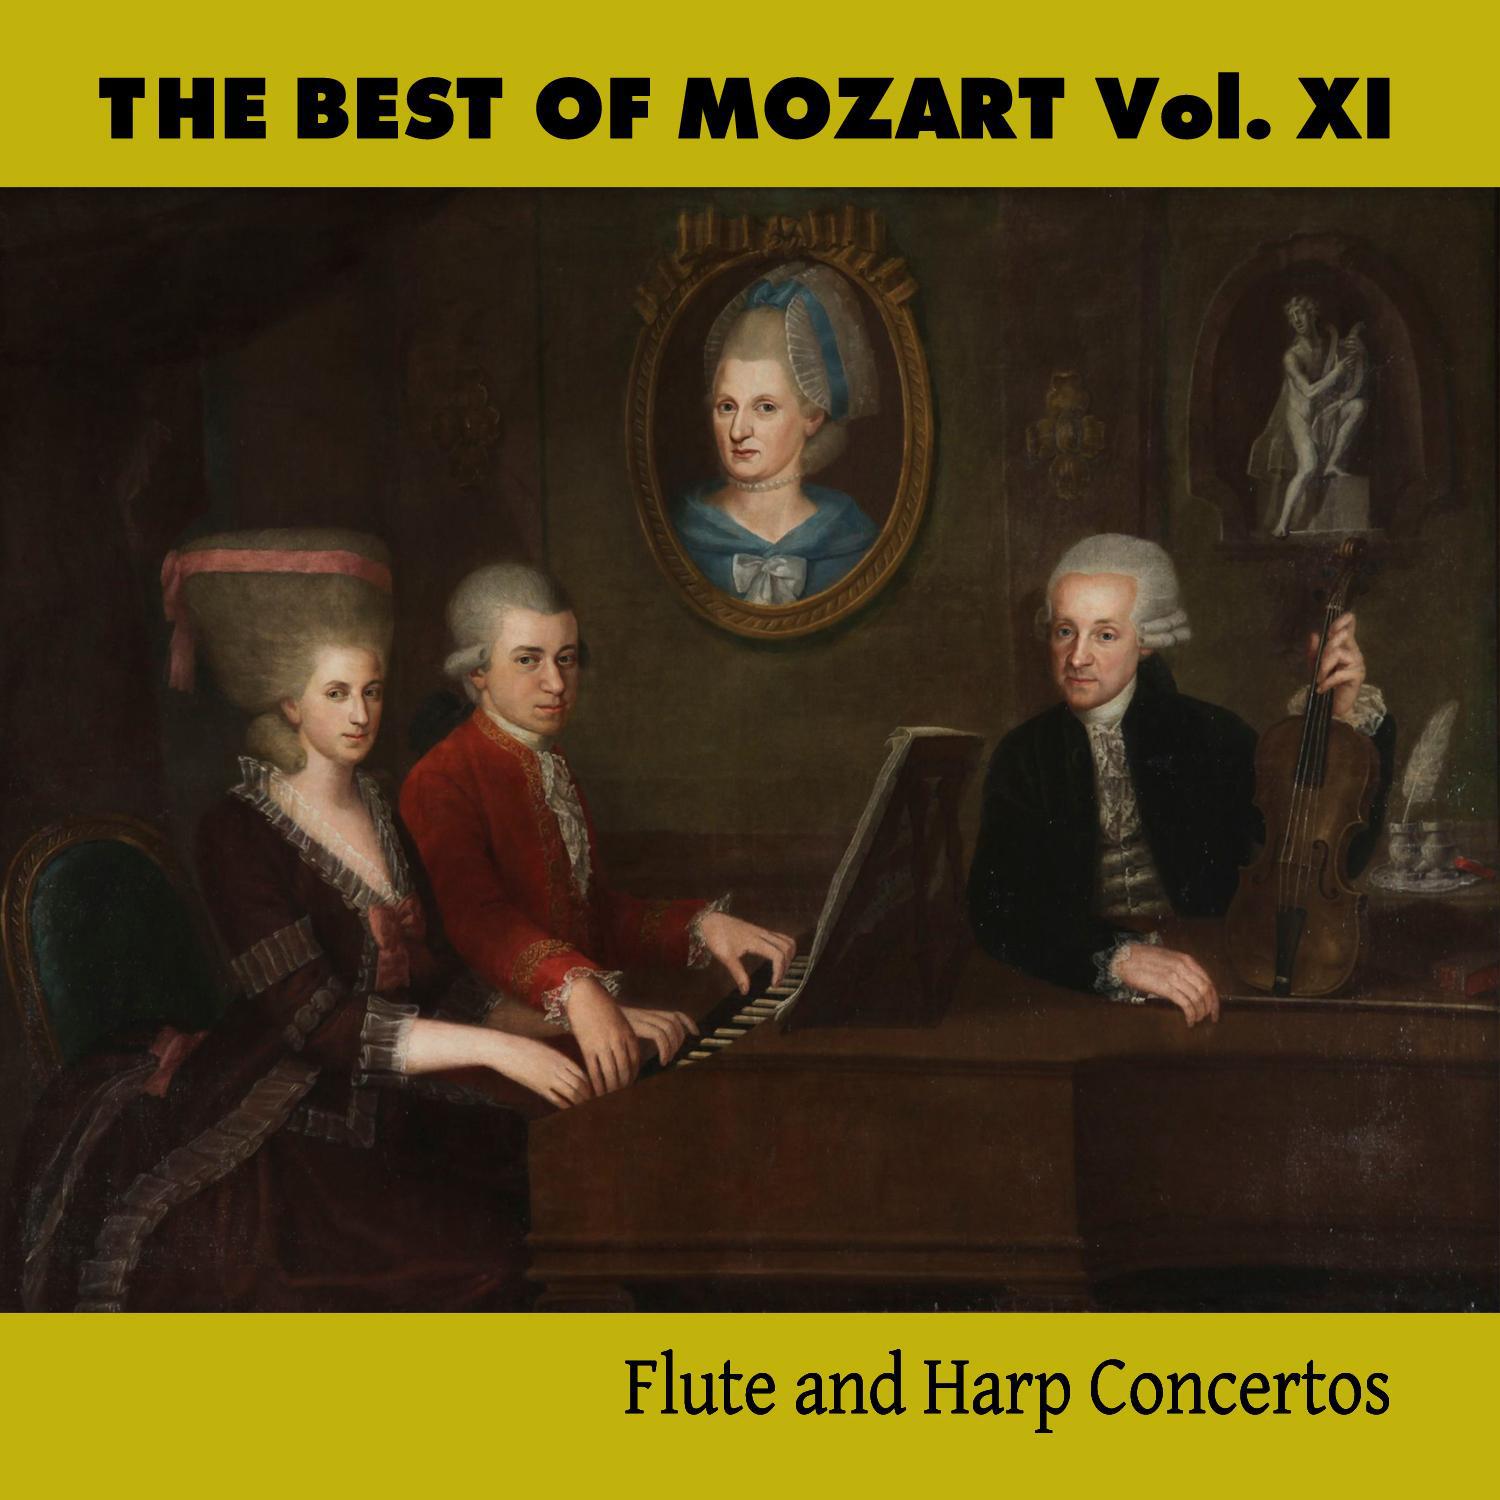 The Best of Mozart Vol. XI, Flute and Harp Concertos